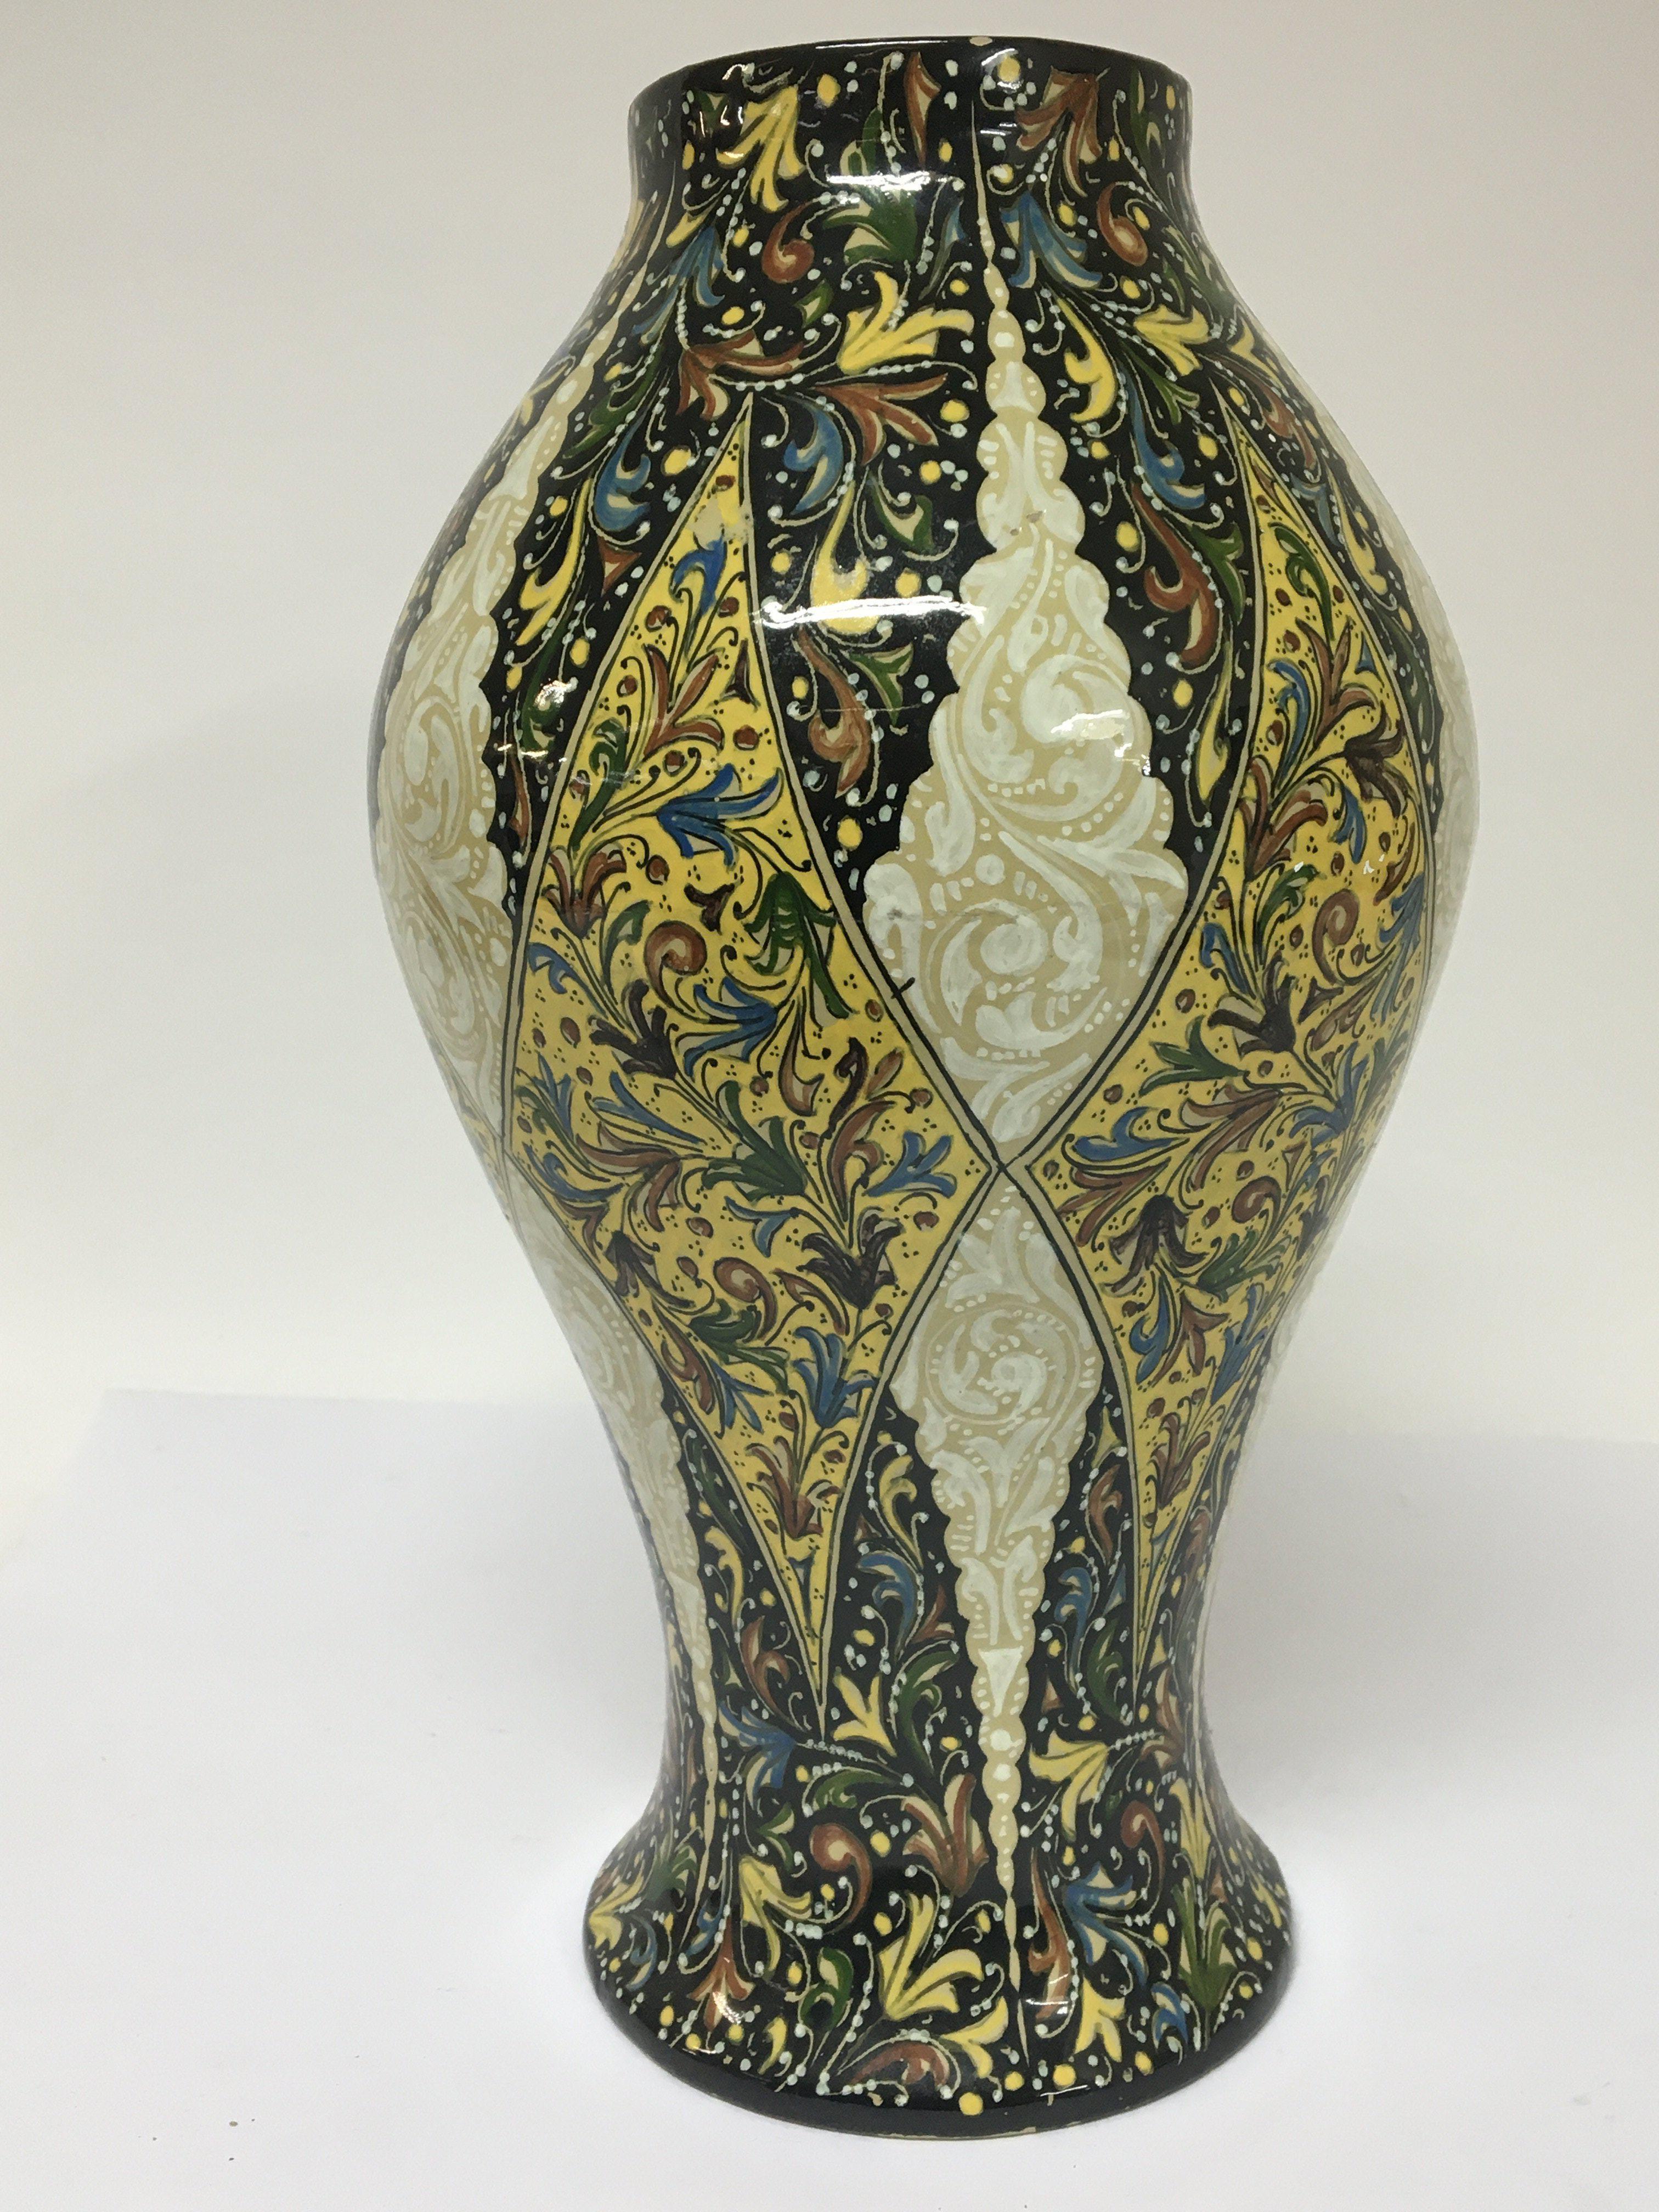 A decorative Italian ceramic vase by Molaroni Pesa